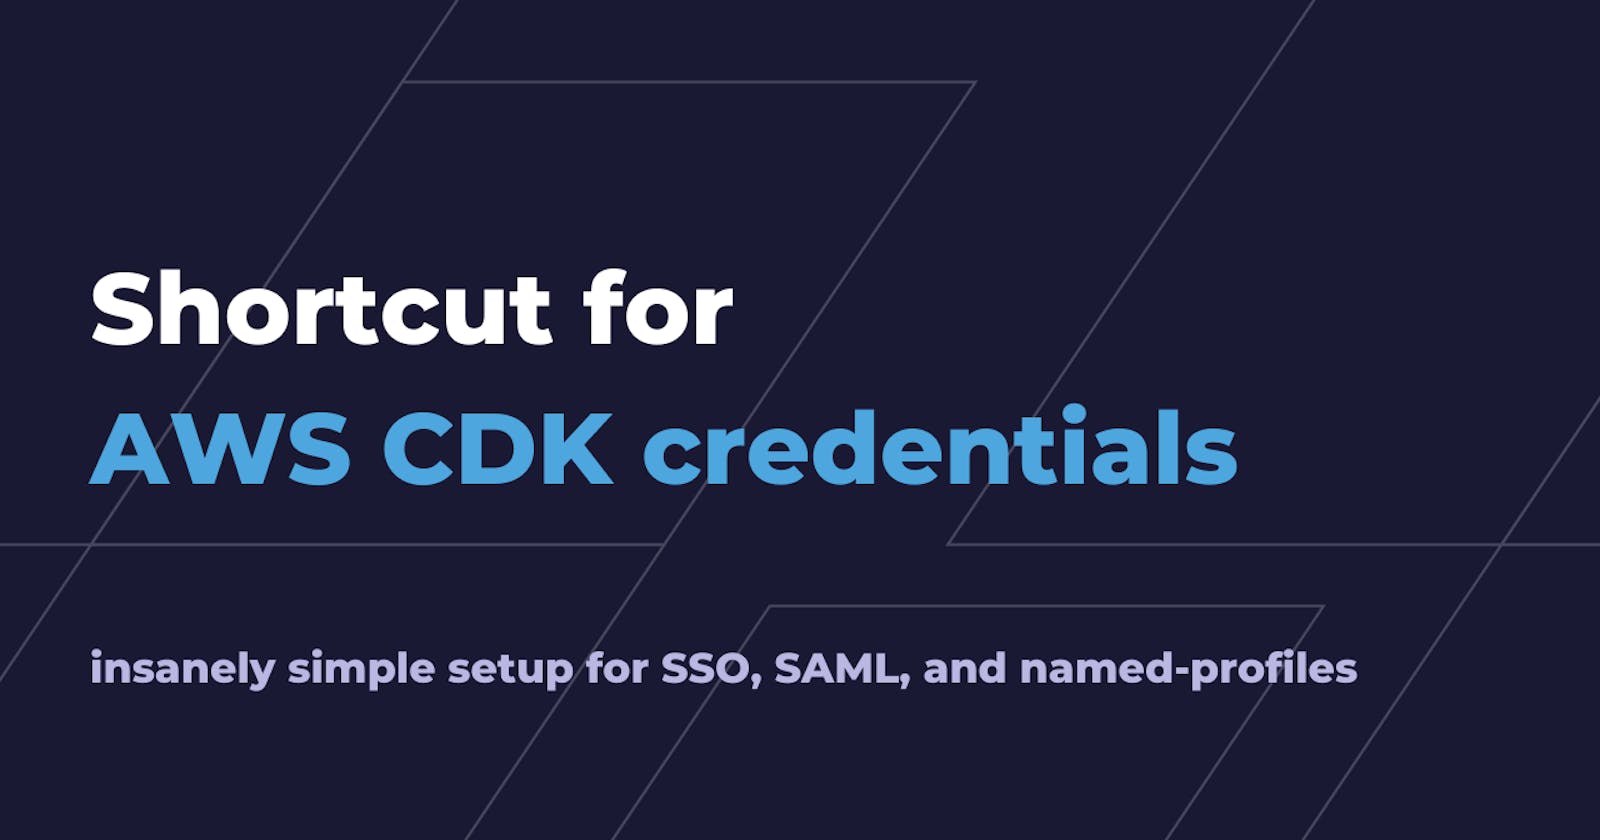 Shortcut for AWS CDK credentials